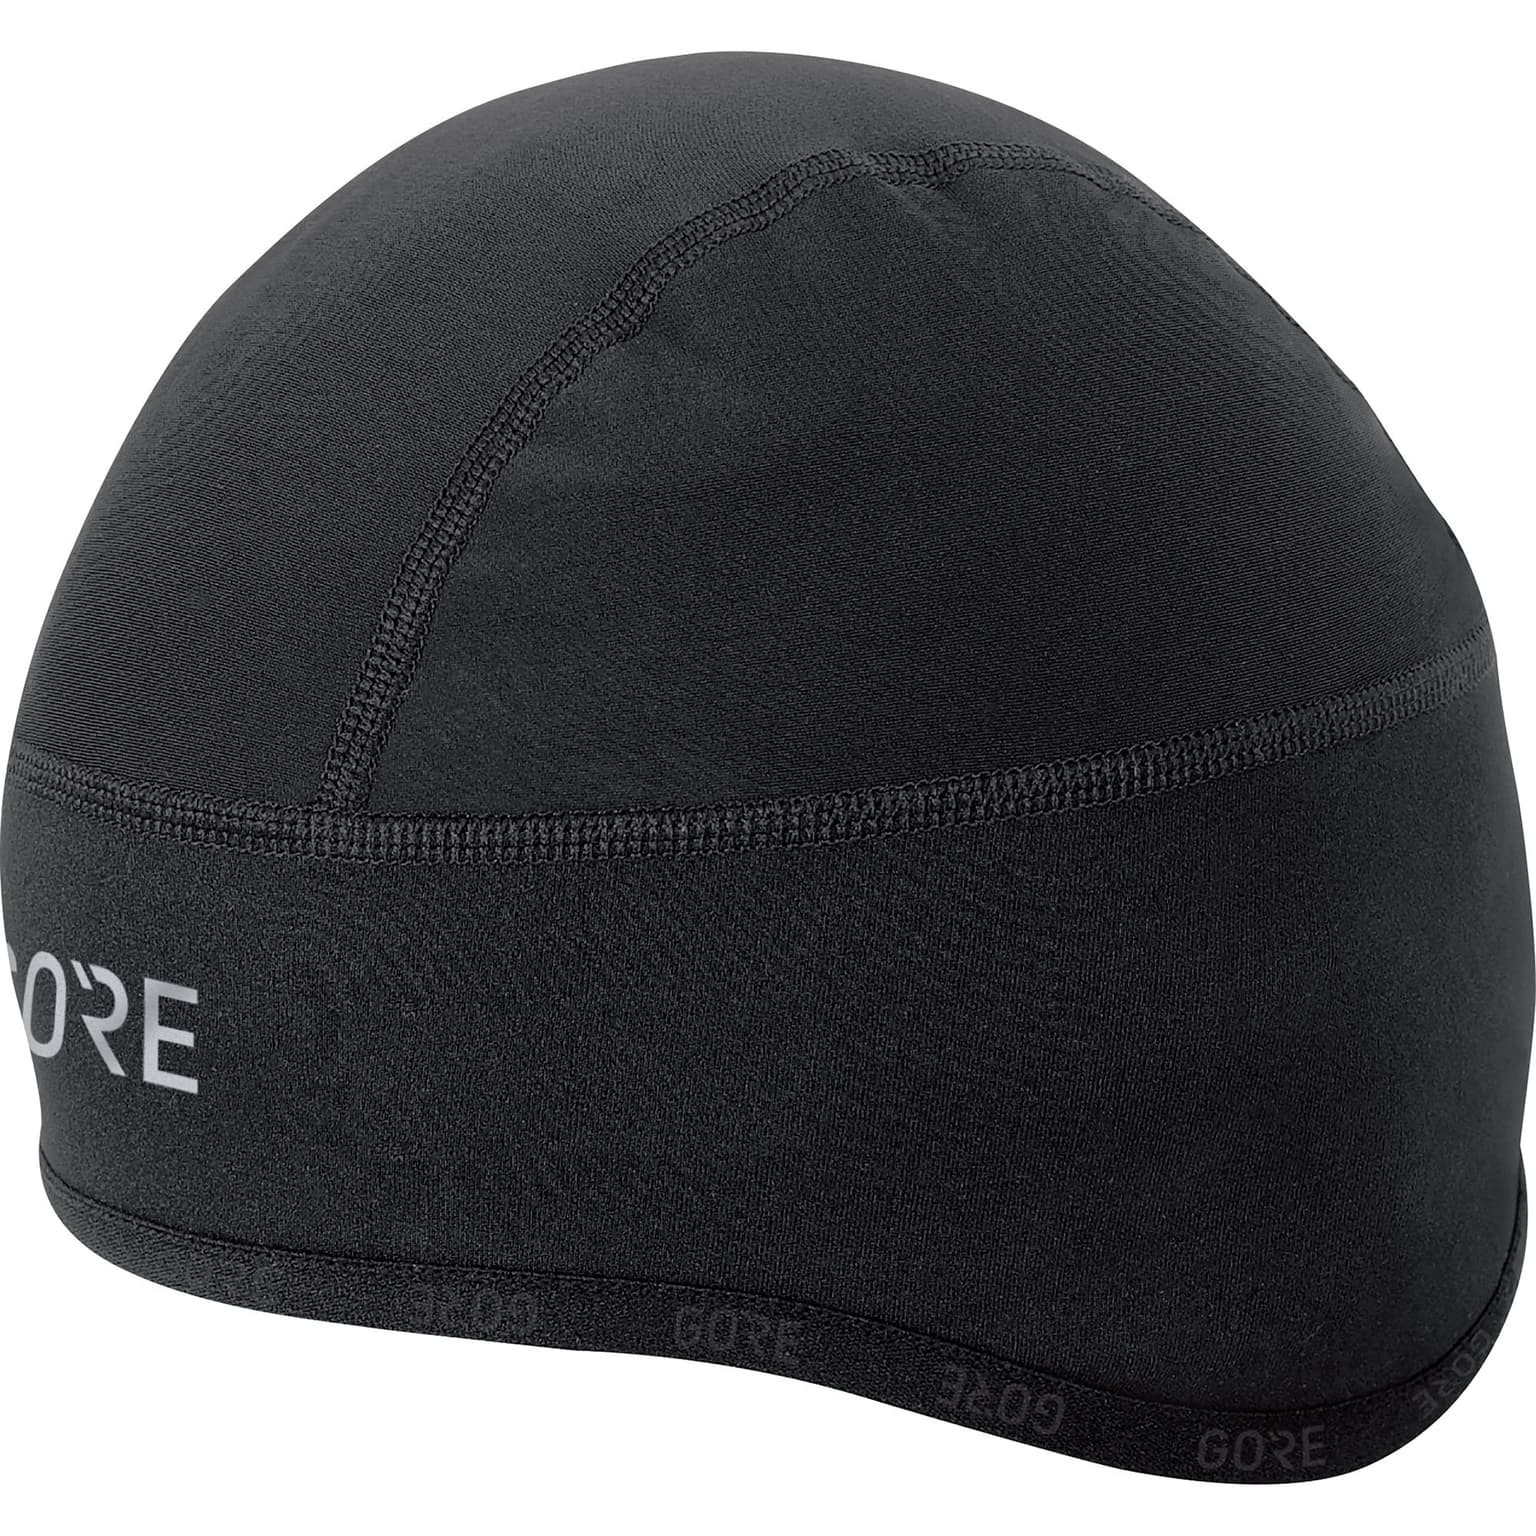 Gore Gore C3 GWS Helmet Kappe Bike-Mütze nero 1